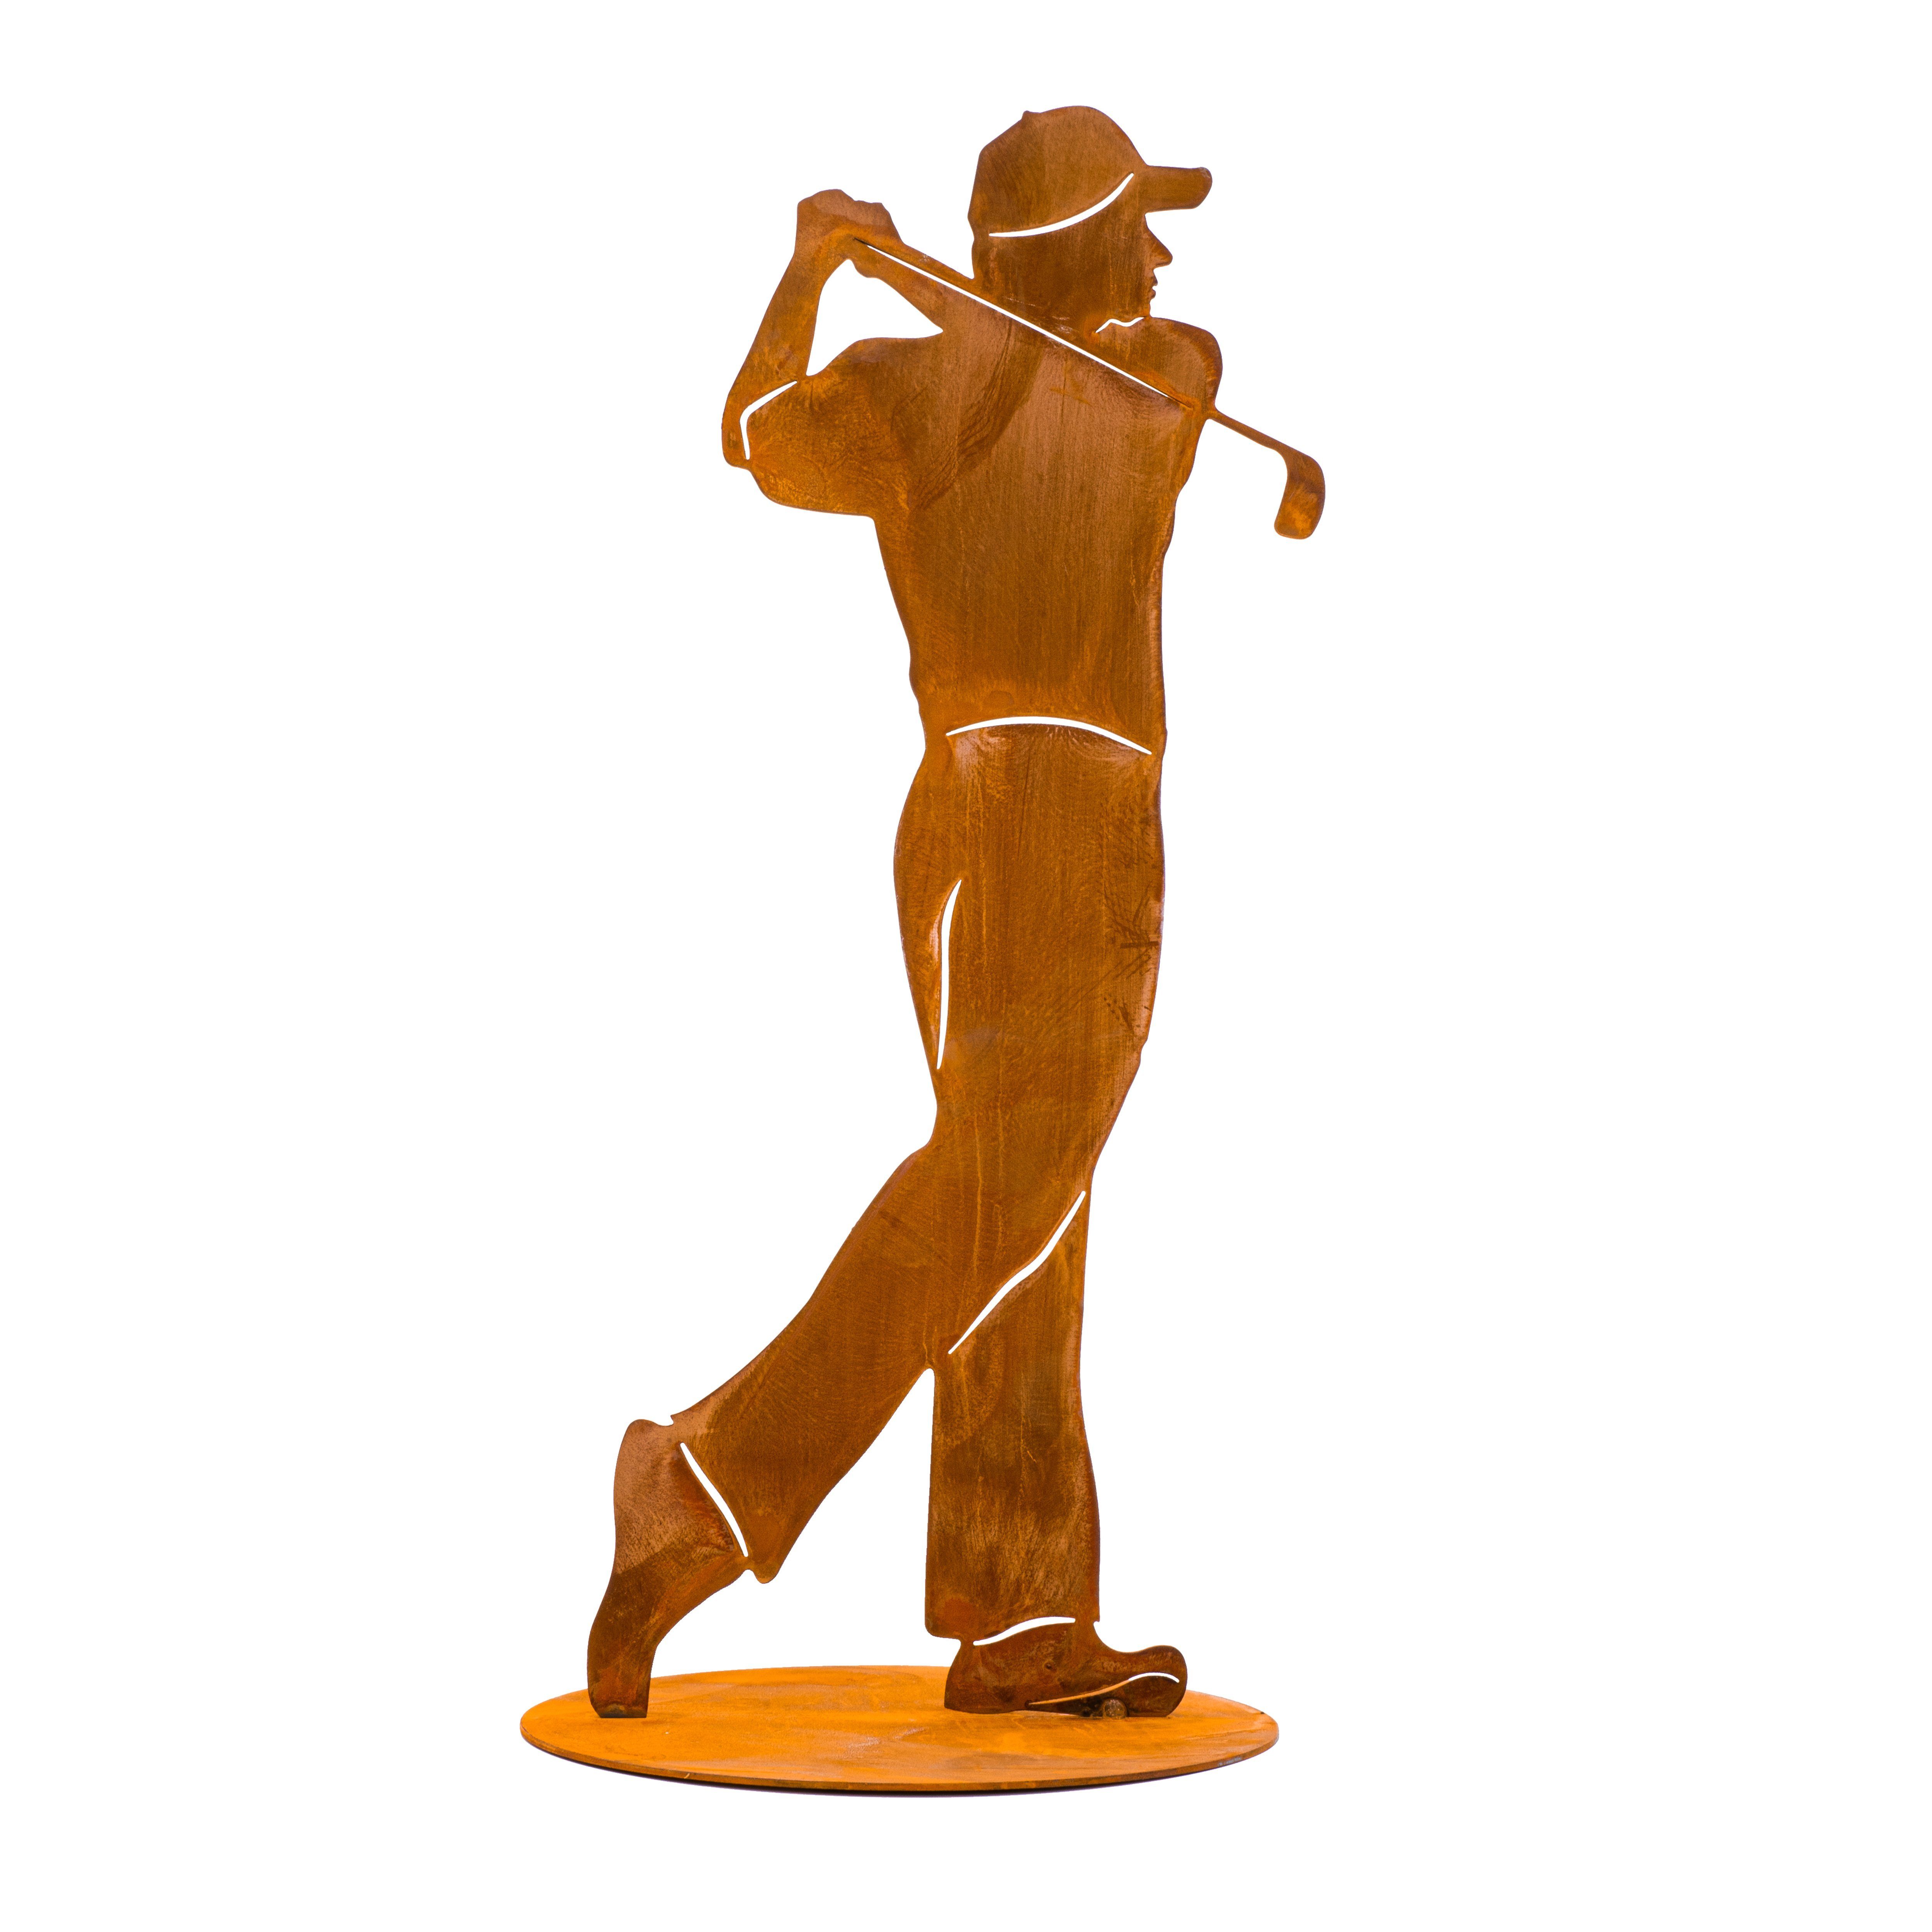 Rostikal Gartenfigur Golfspieler Figur, Gartendeko Rost Golfer Skulptur, echter Rost